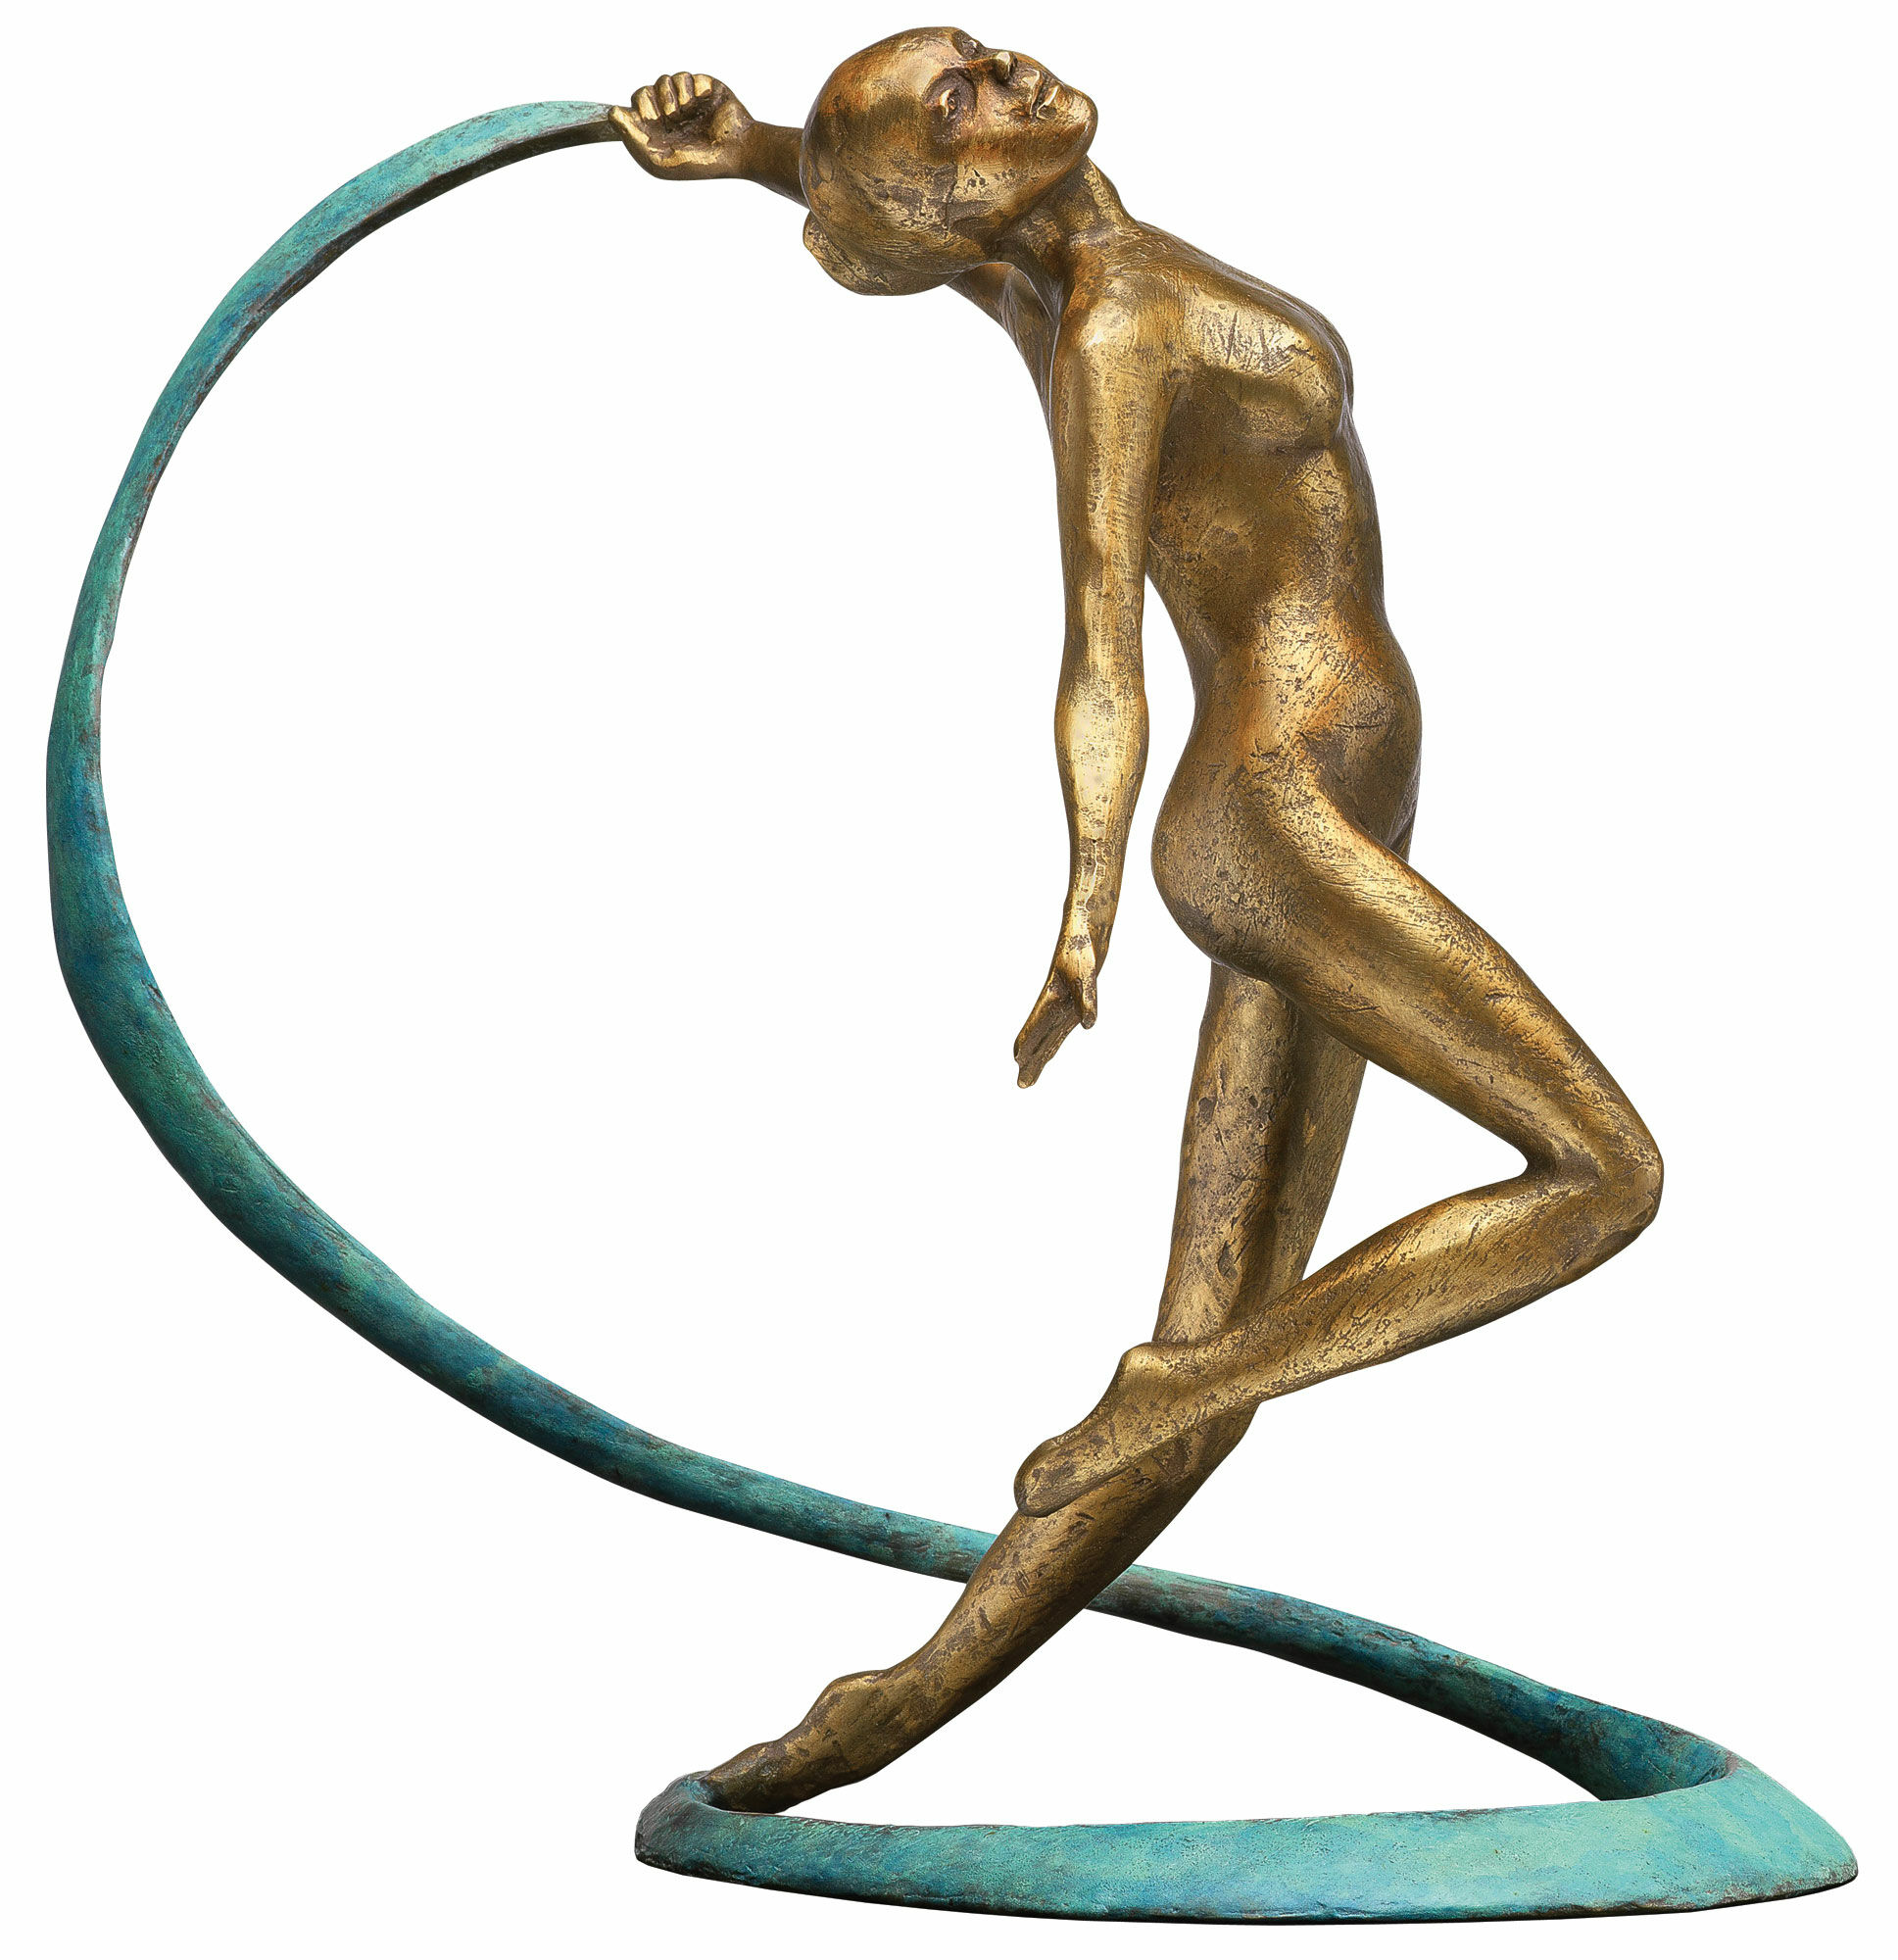 Sculpture "Veil Dancer", bronze by Birgit Stauch